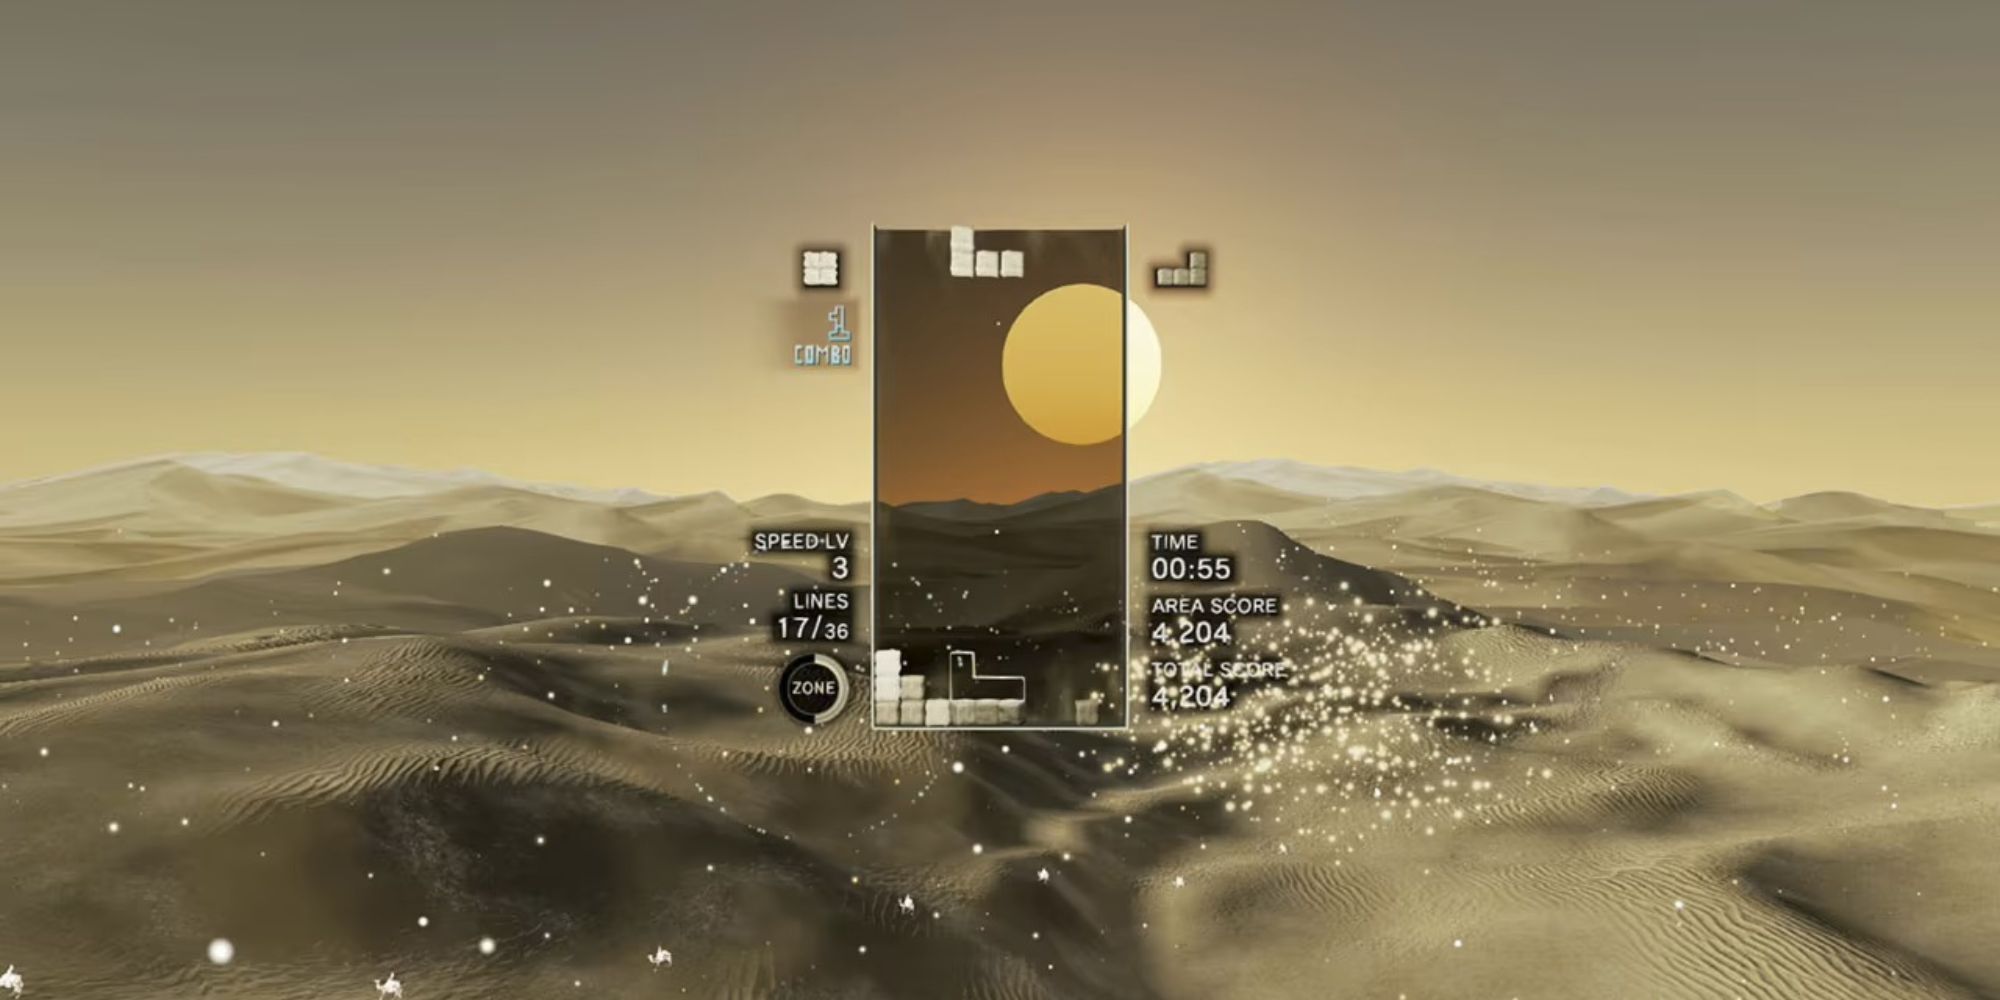 A Tetris board hovers over a desert